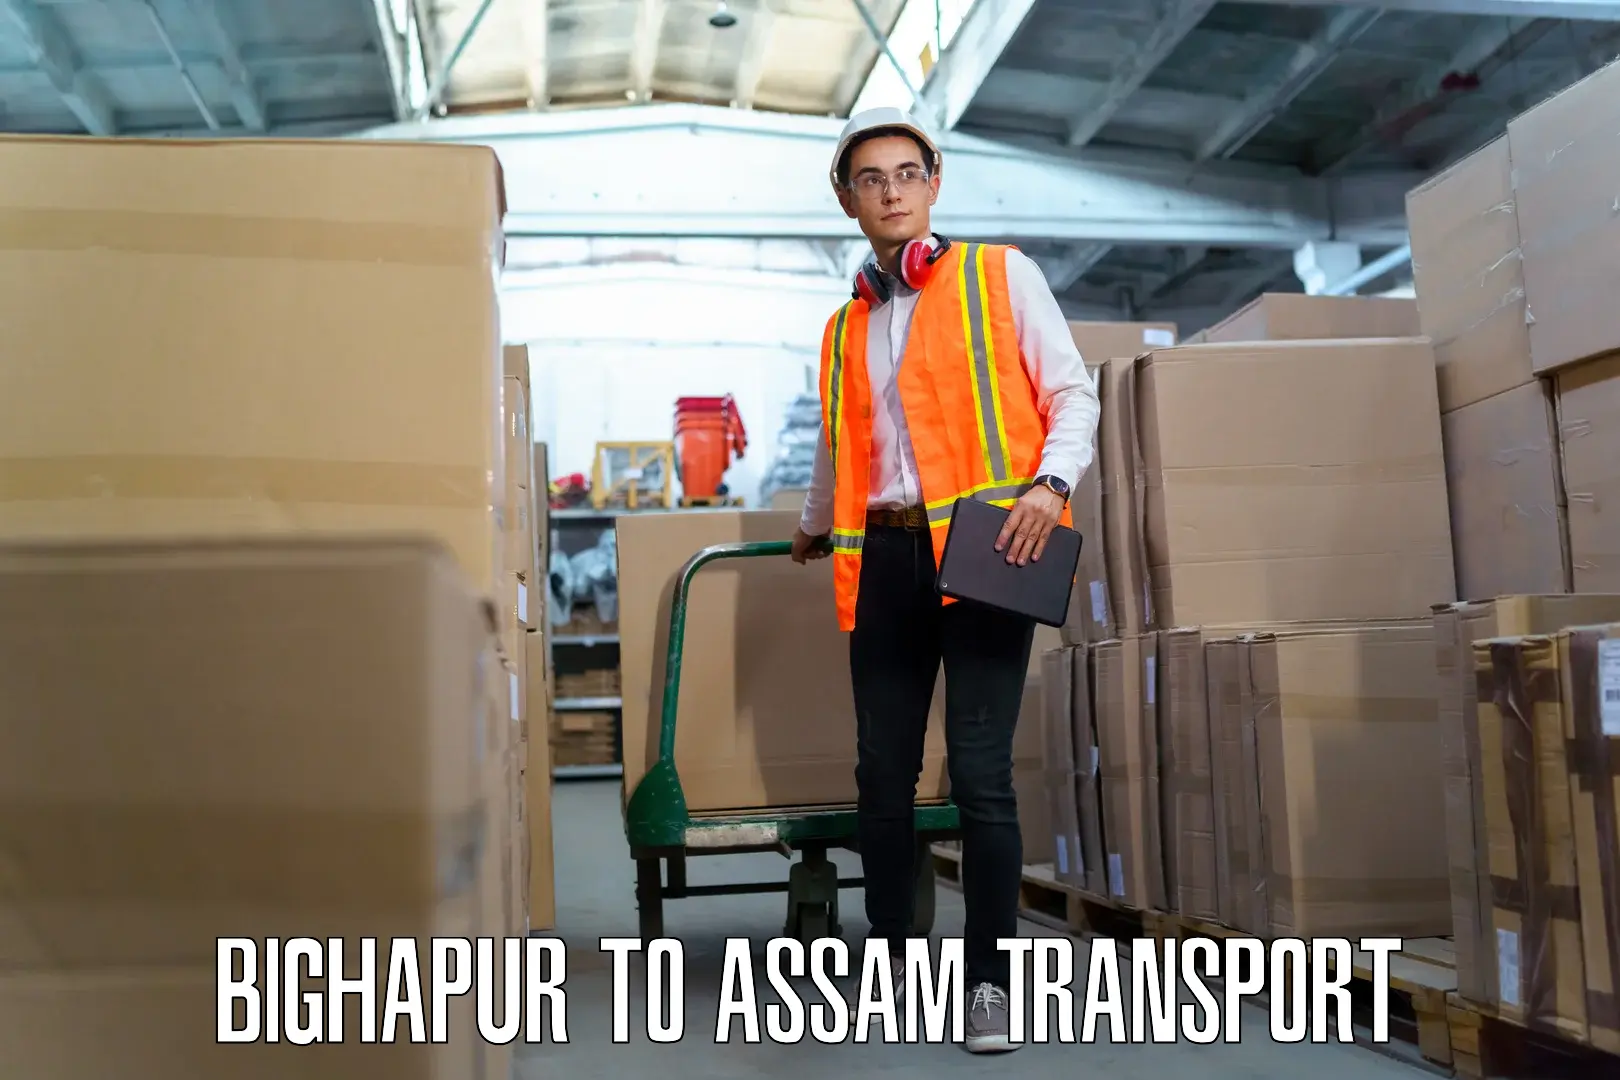 Furniture transport service Bighapur to Mariani